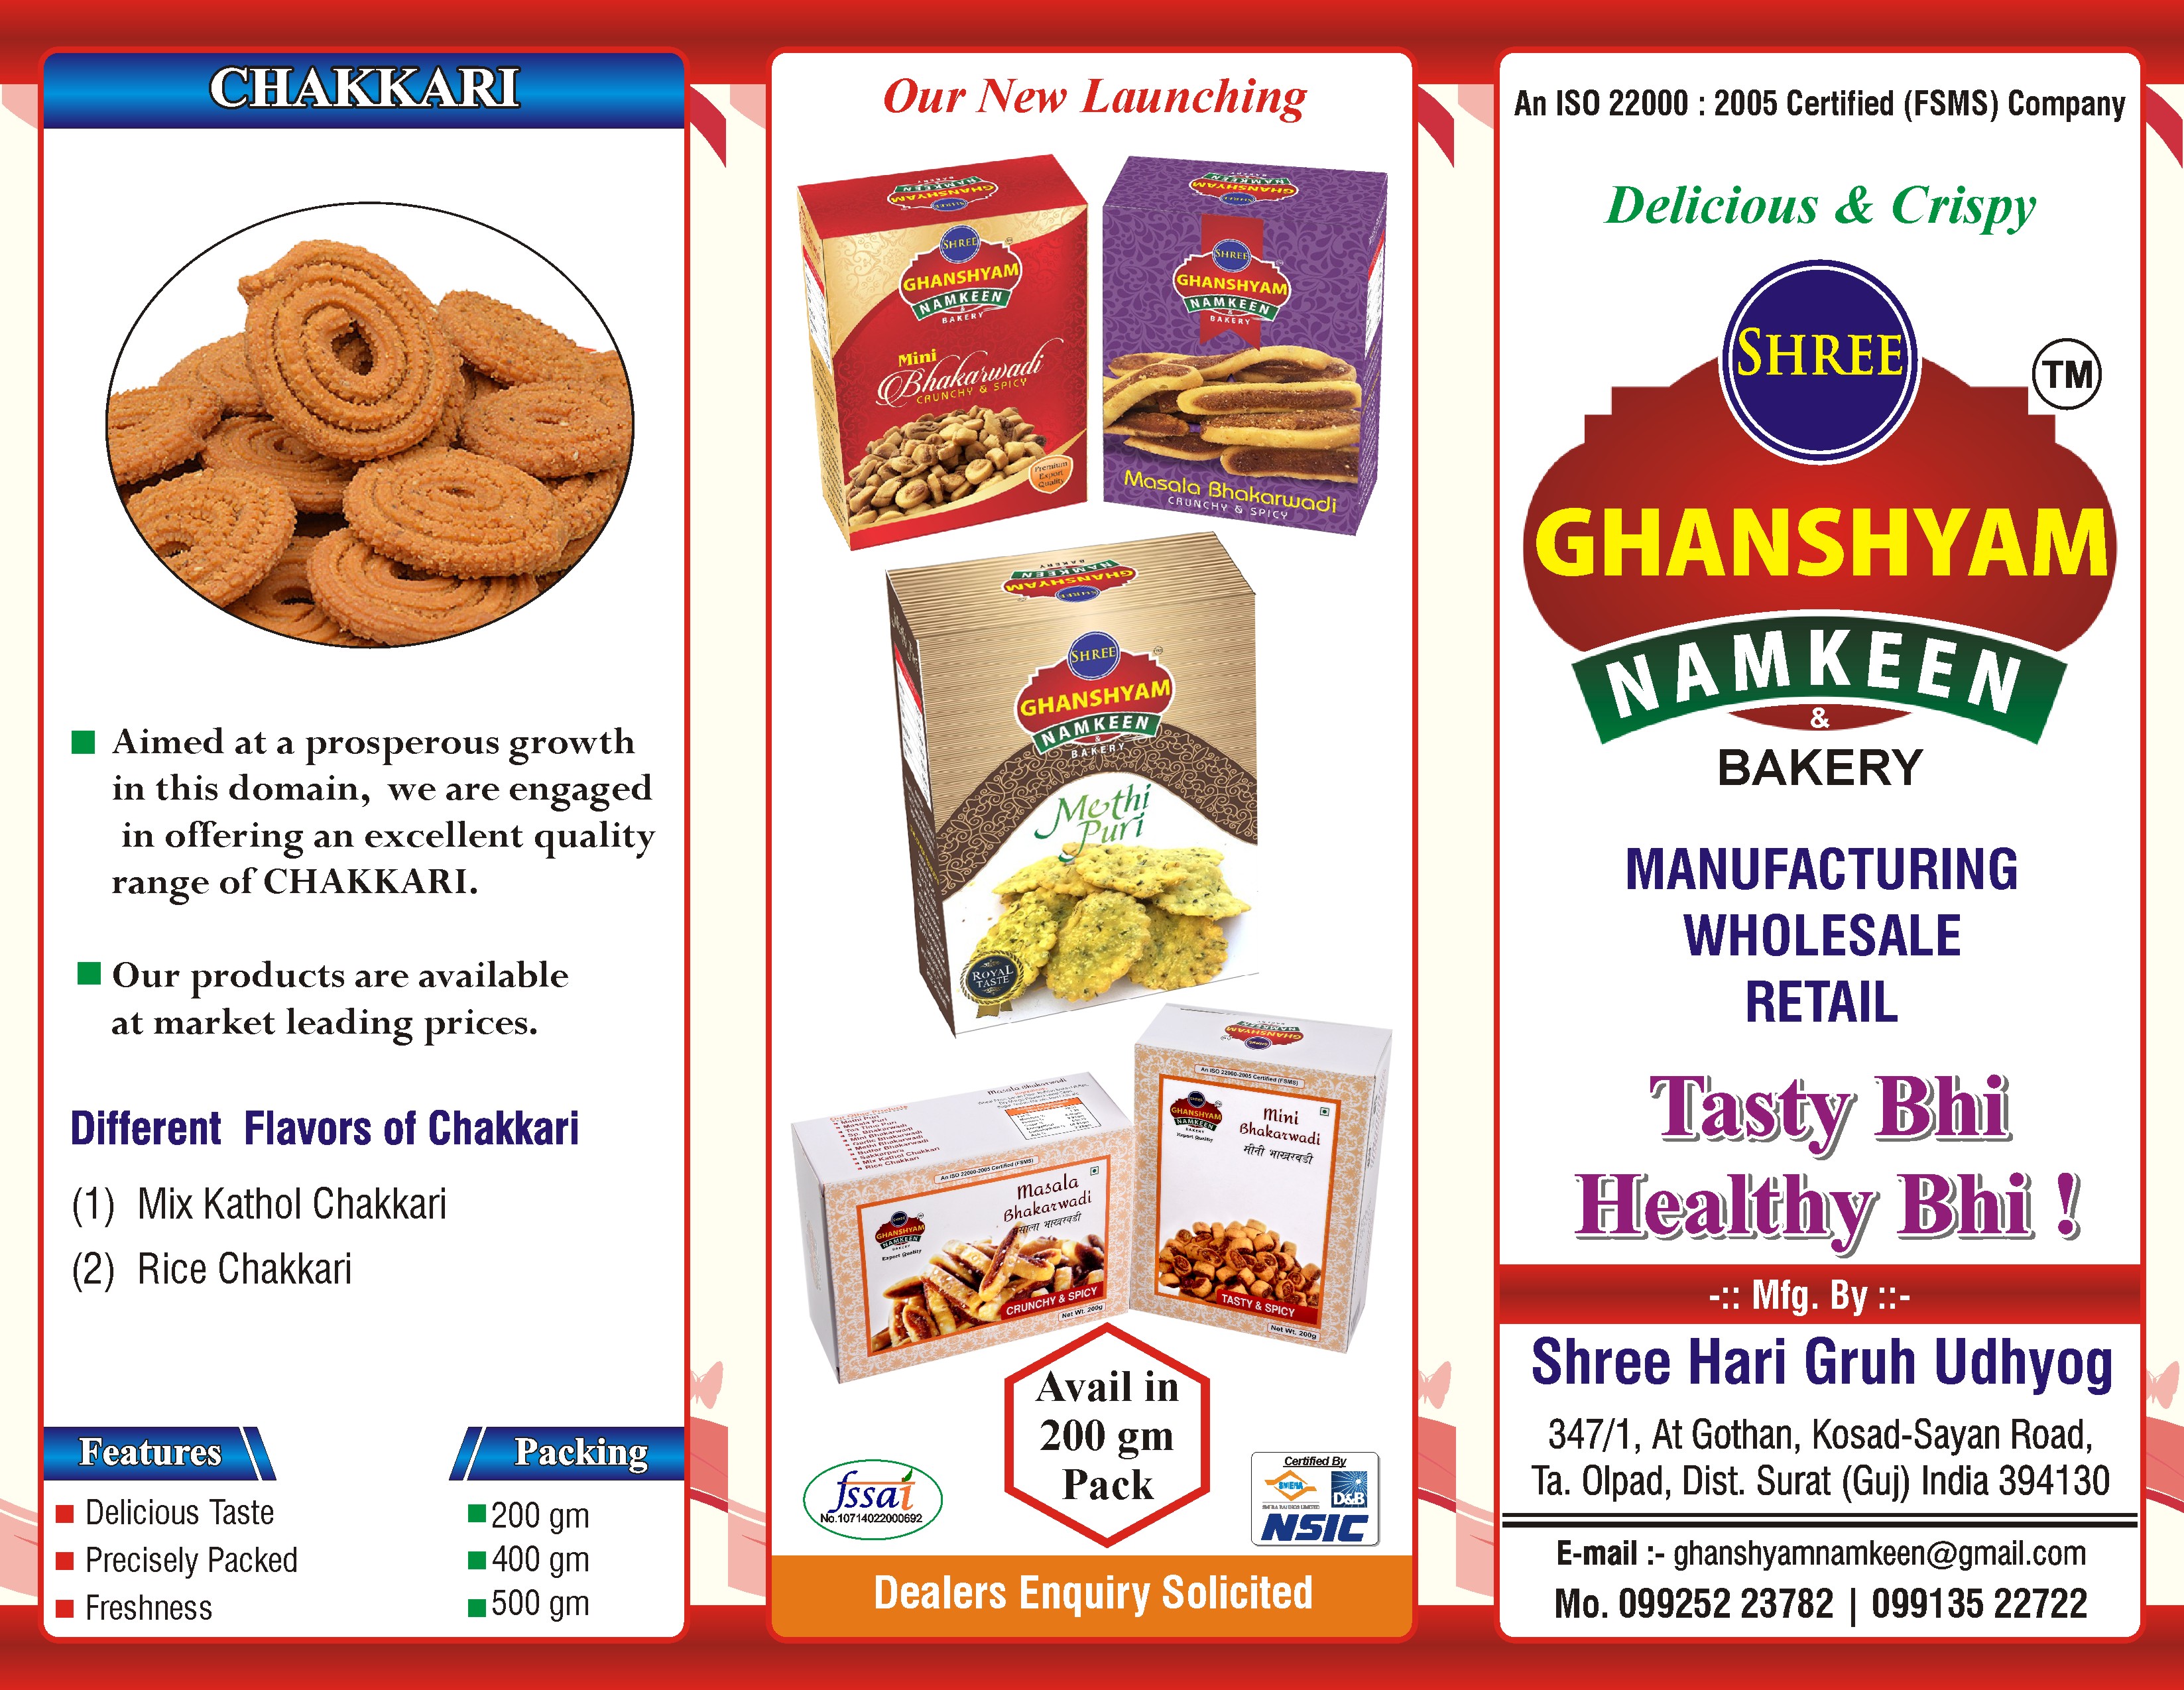 Namkeen and Bakery ProductsFoods and DiningFood SnacksCentral DelhiSadar Bazar